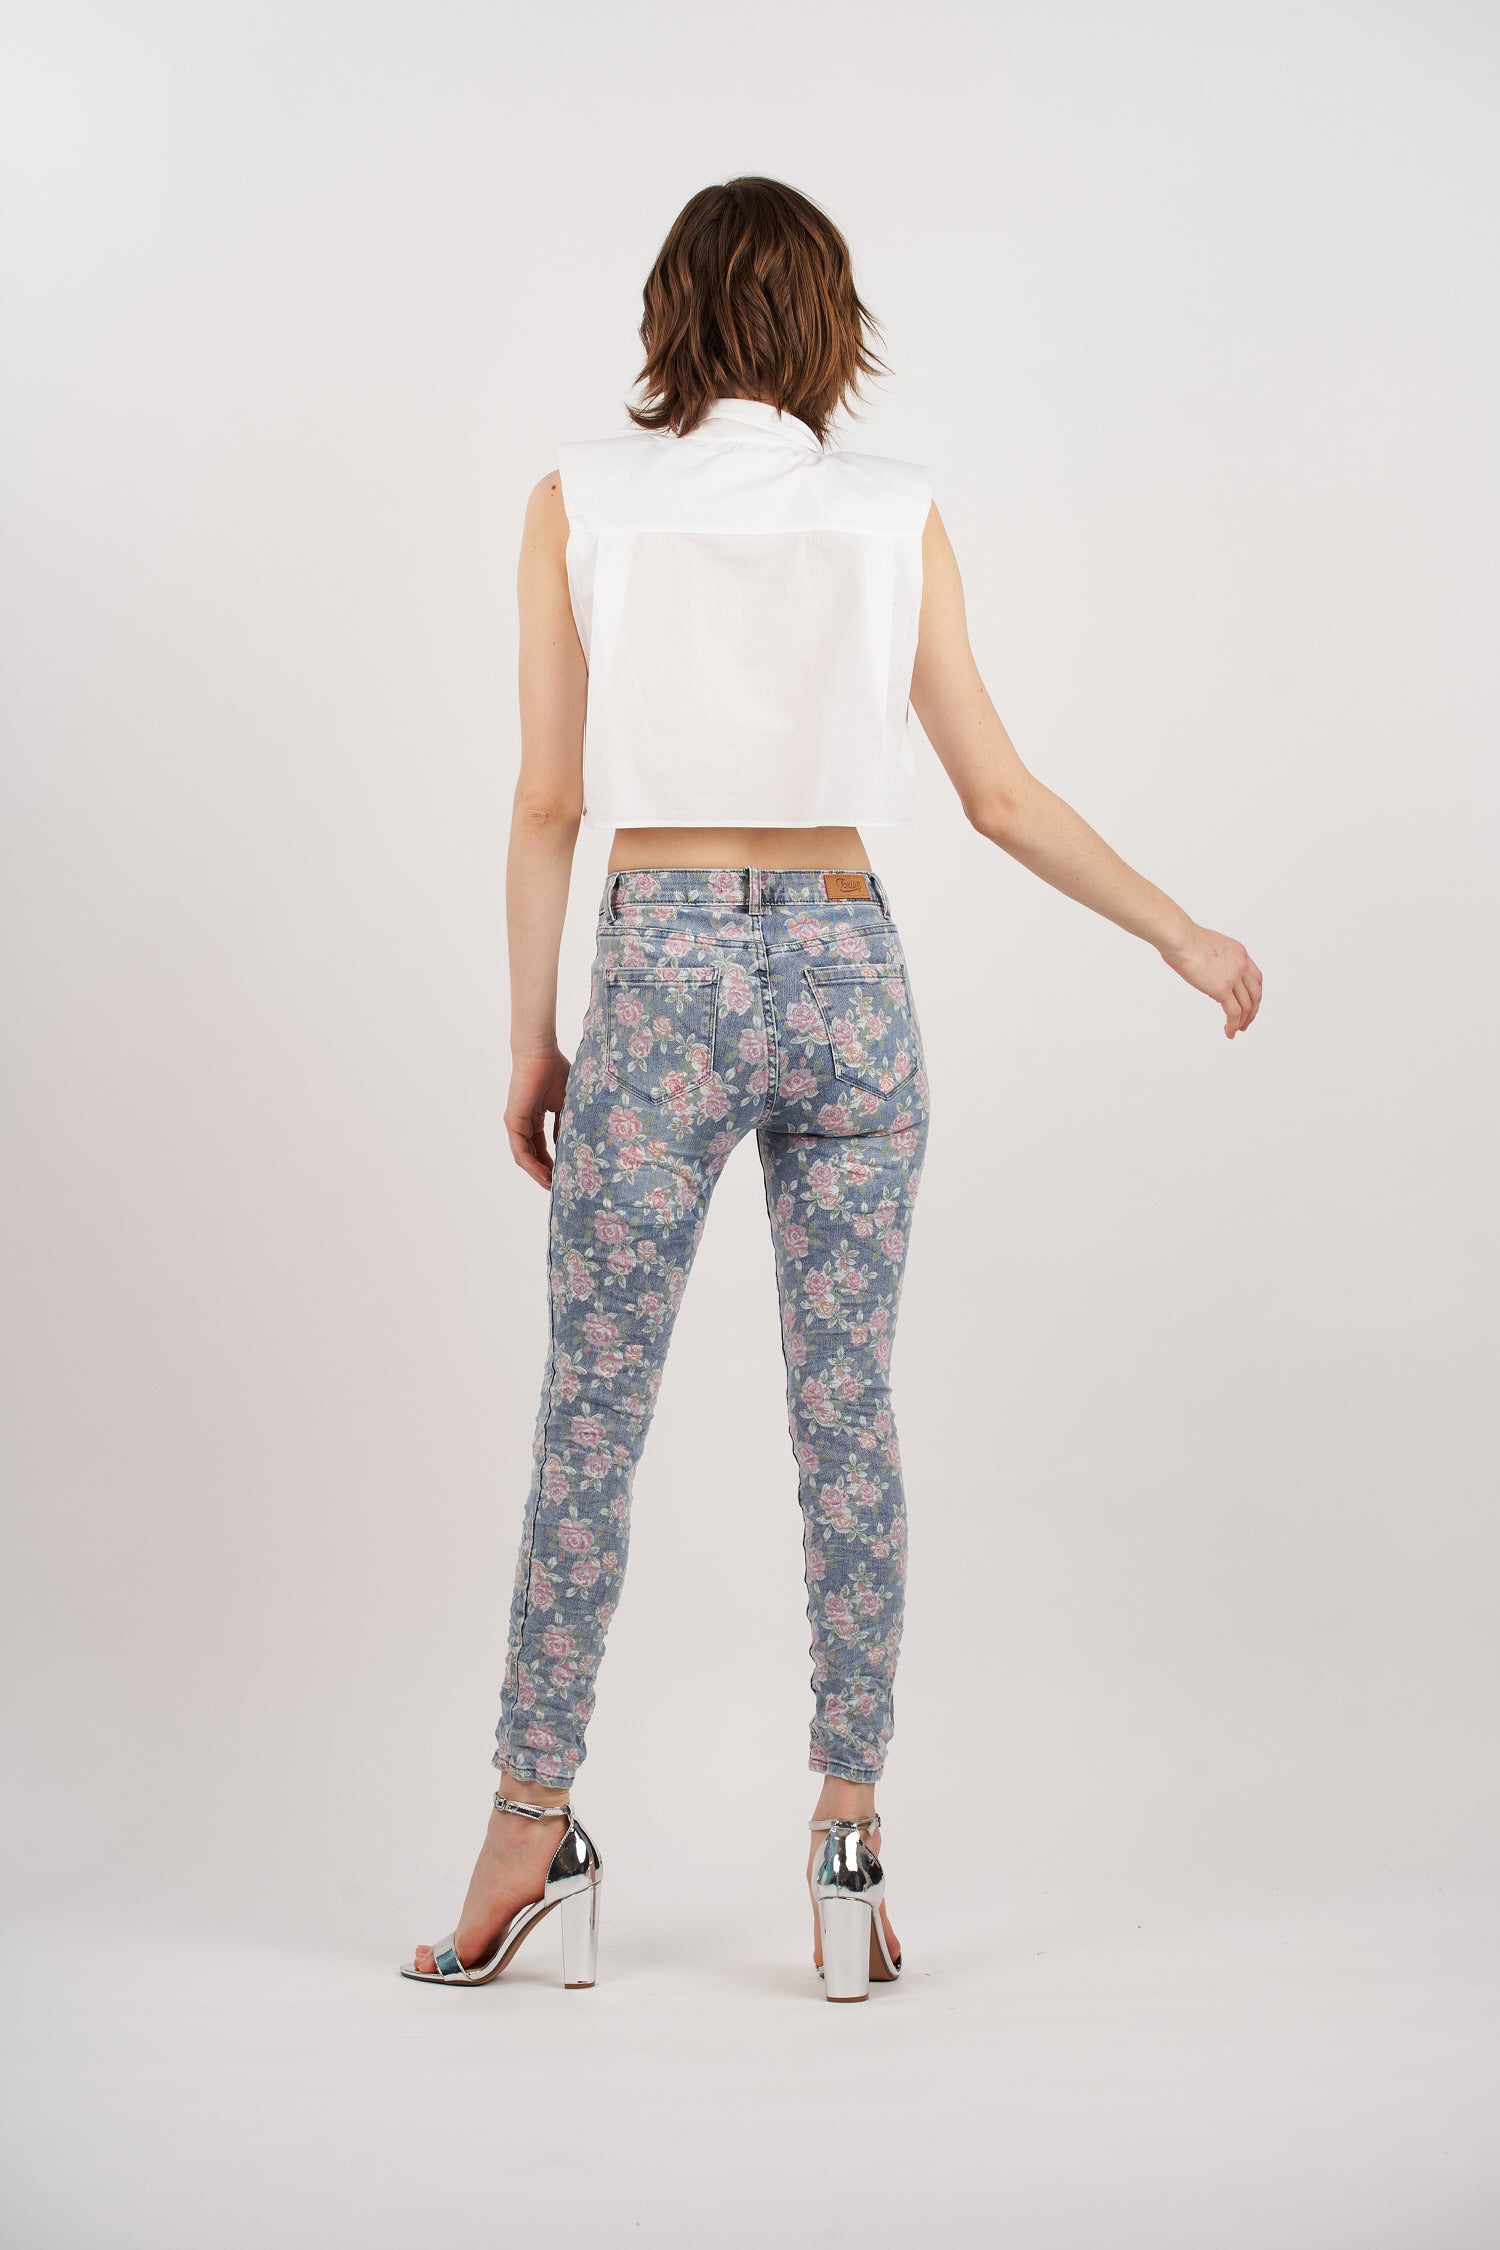 Flower printed jeans - Cora